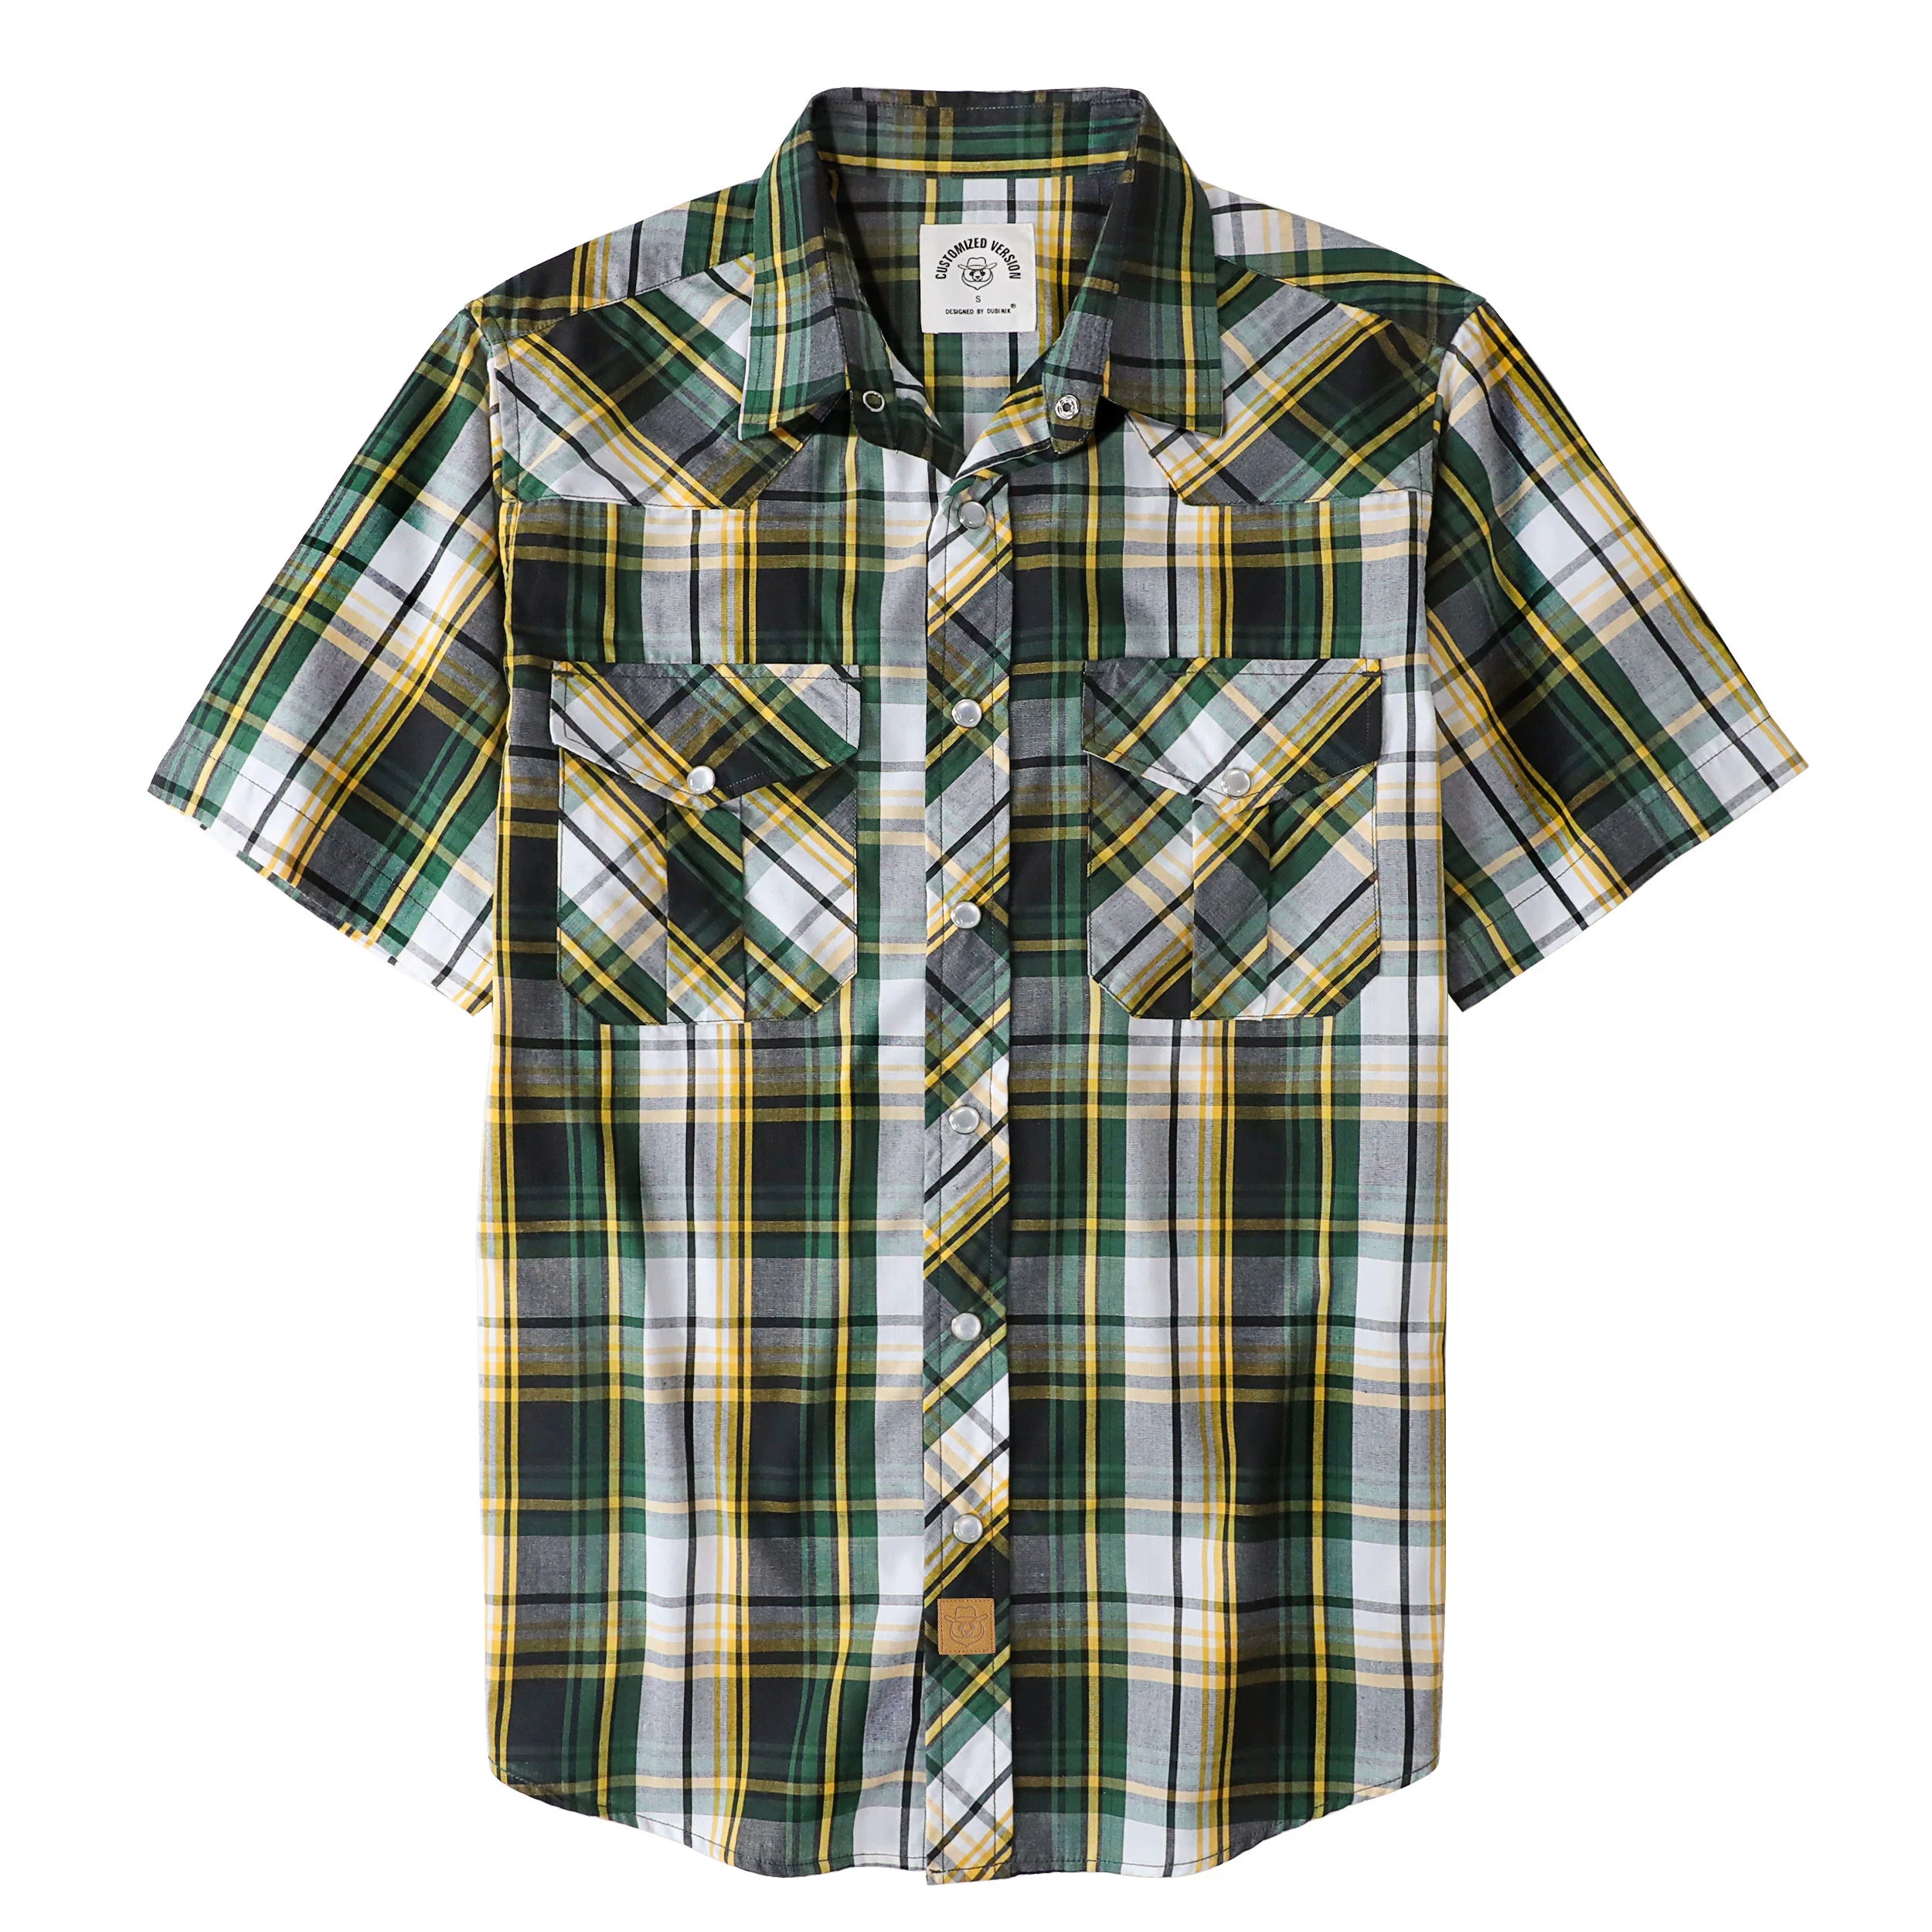 Dubinik® Western Shirts for Men Short Sleeve Plaid Pearl Snap Shirts for Men Button Up Shirt Cowboy Casual Work Shirt#41004